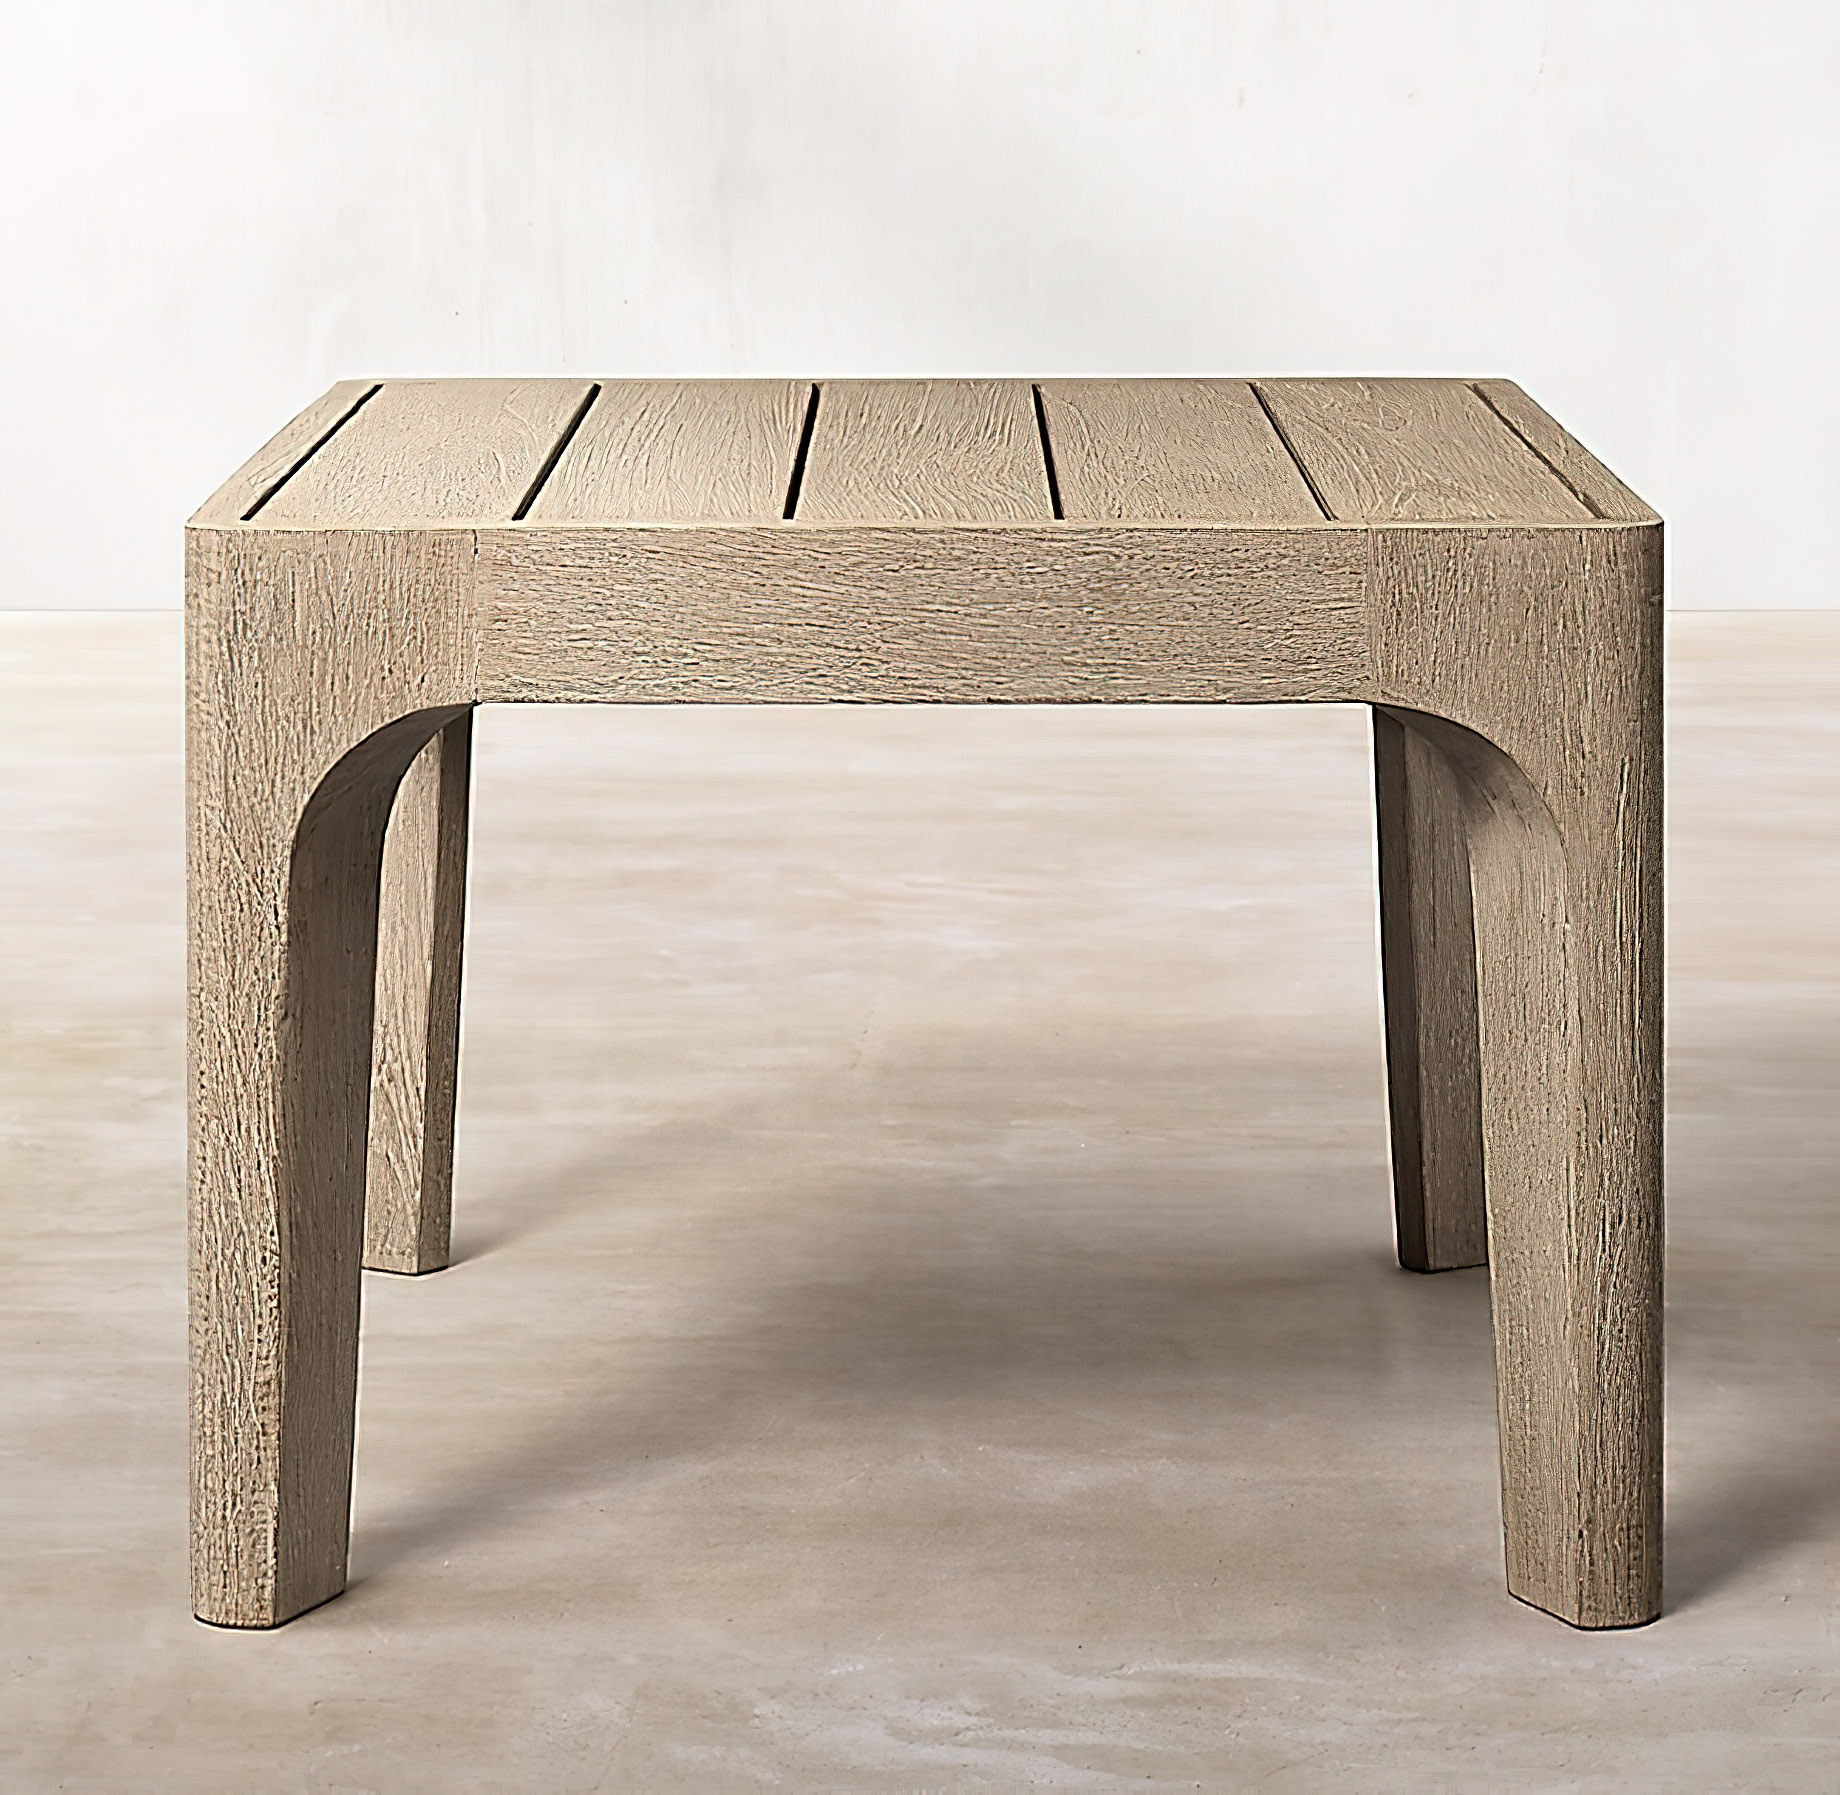 Malta Teak Collection Outdoor Furniture Design for RH - Ramon Esteve - Malta Teak Side Table